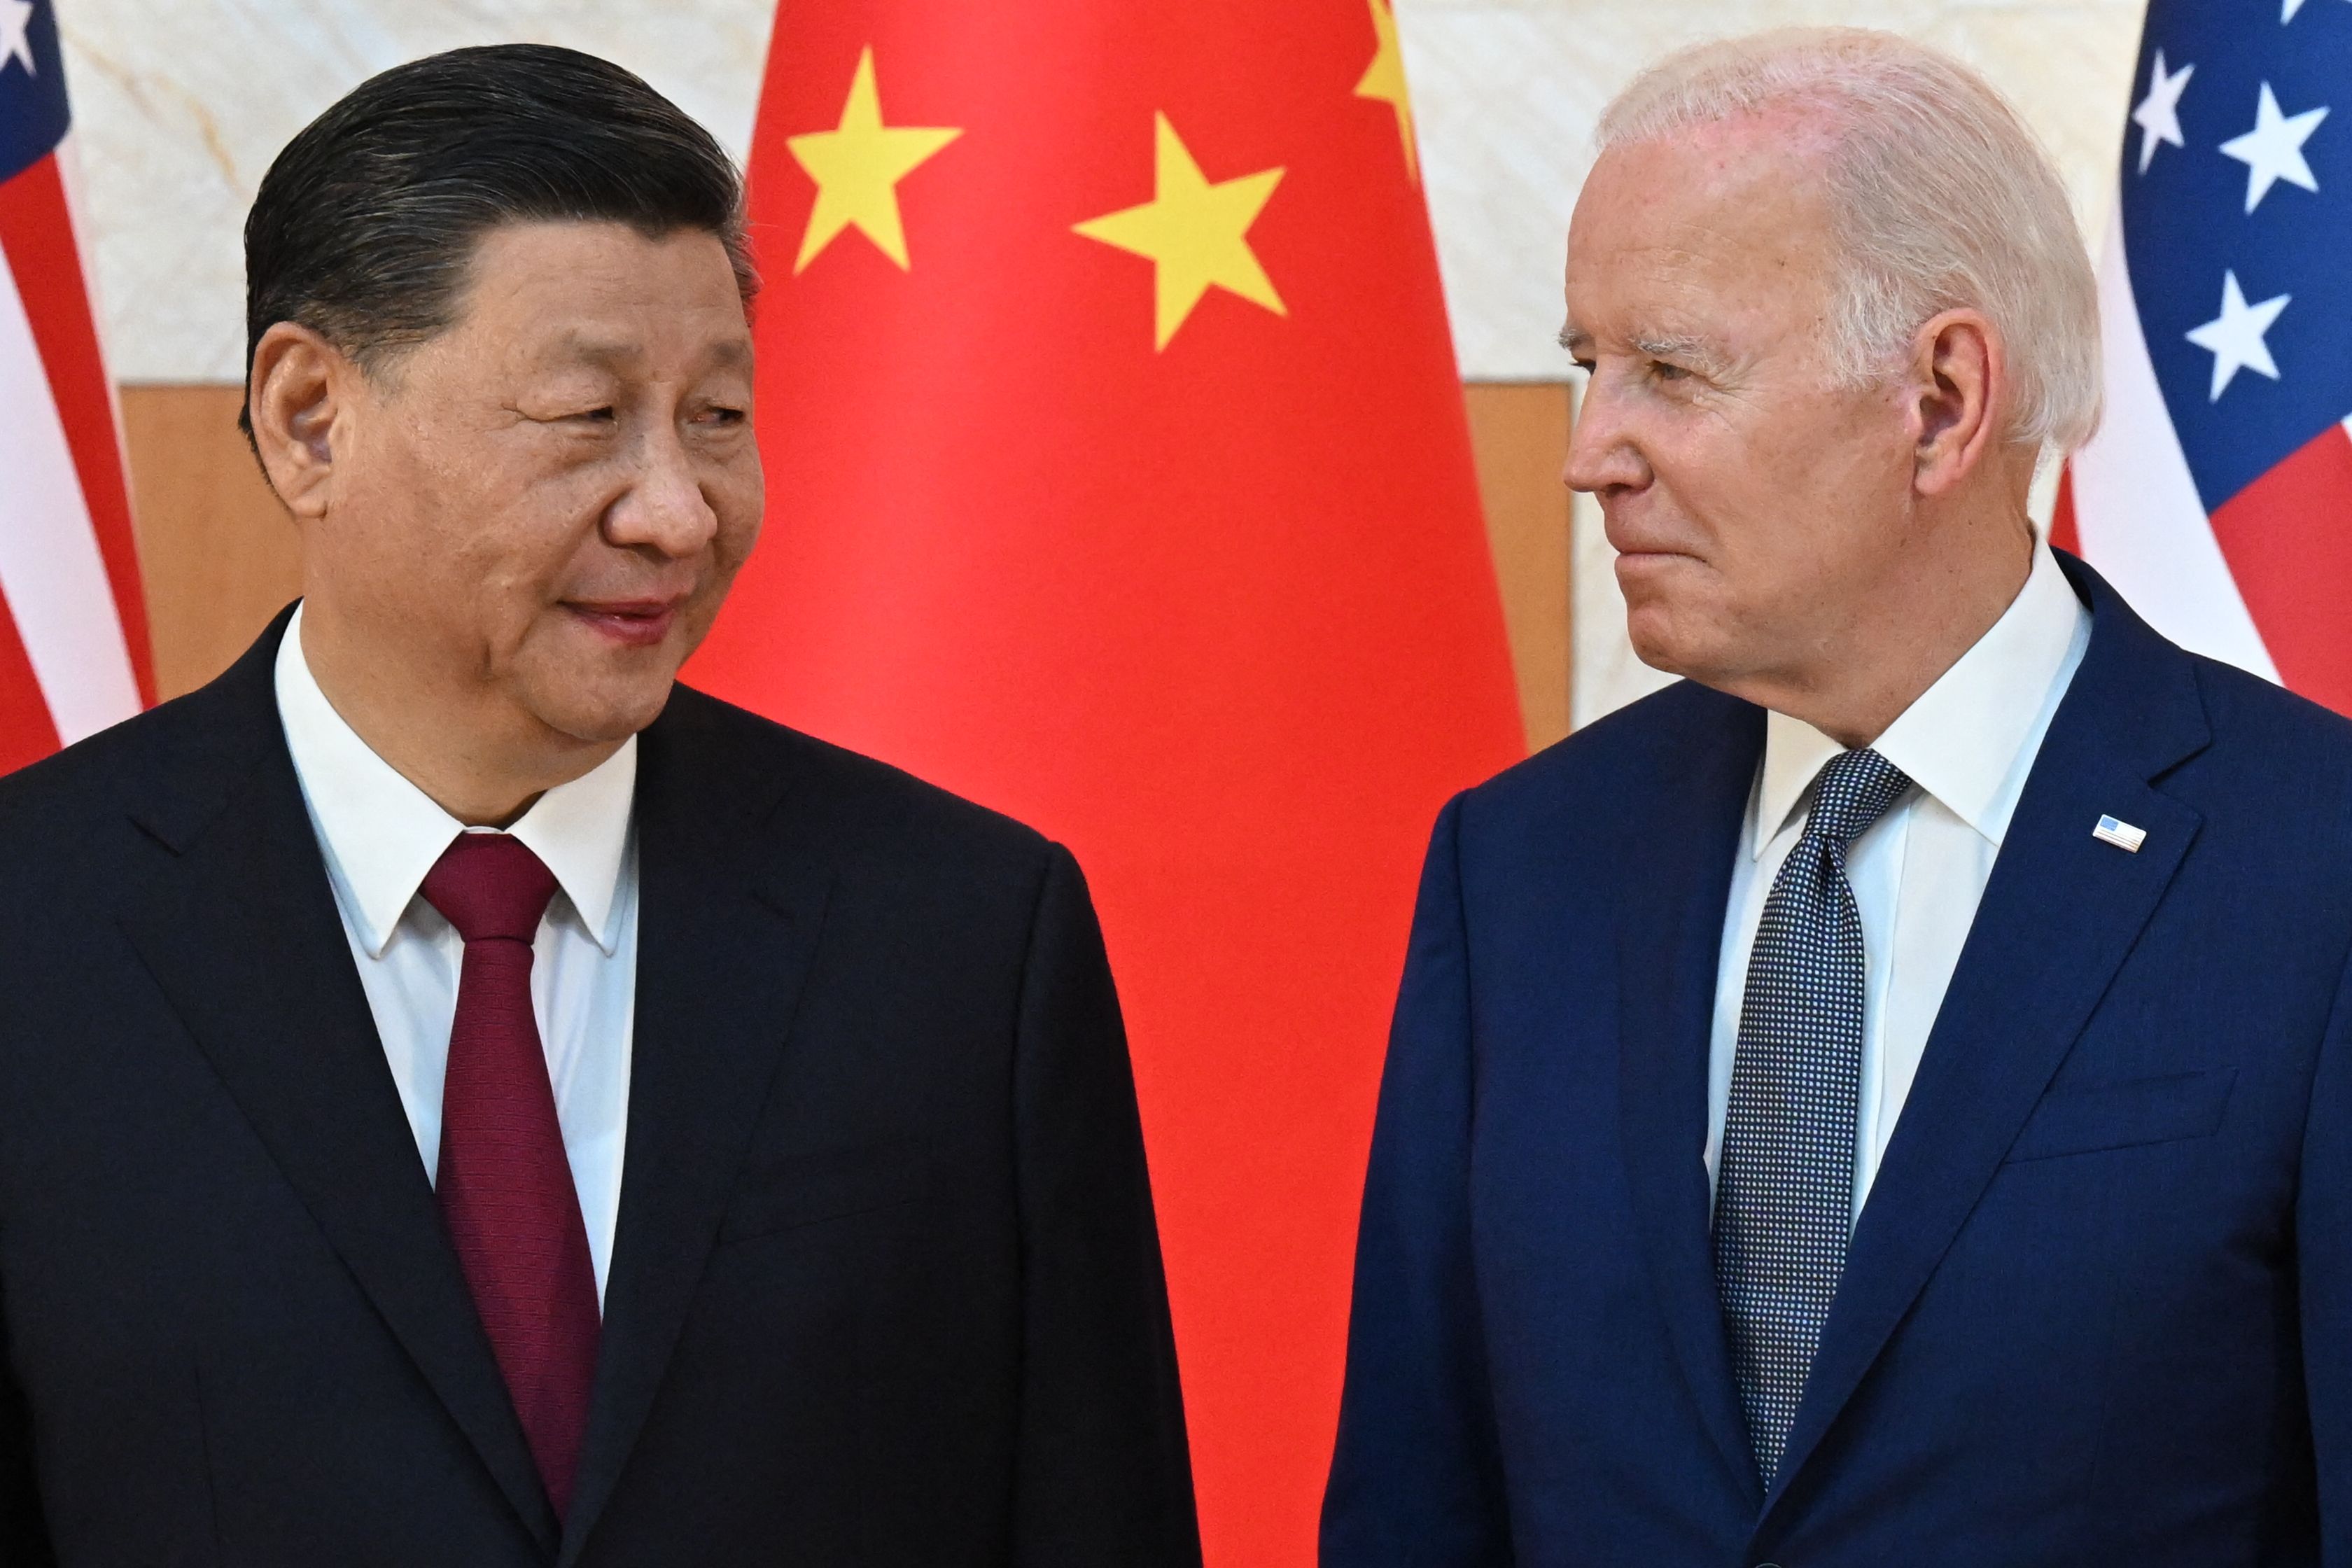 China slams Biden for equating Xi to ‘dictators’